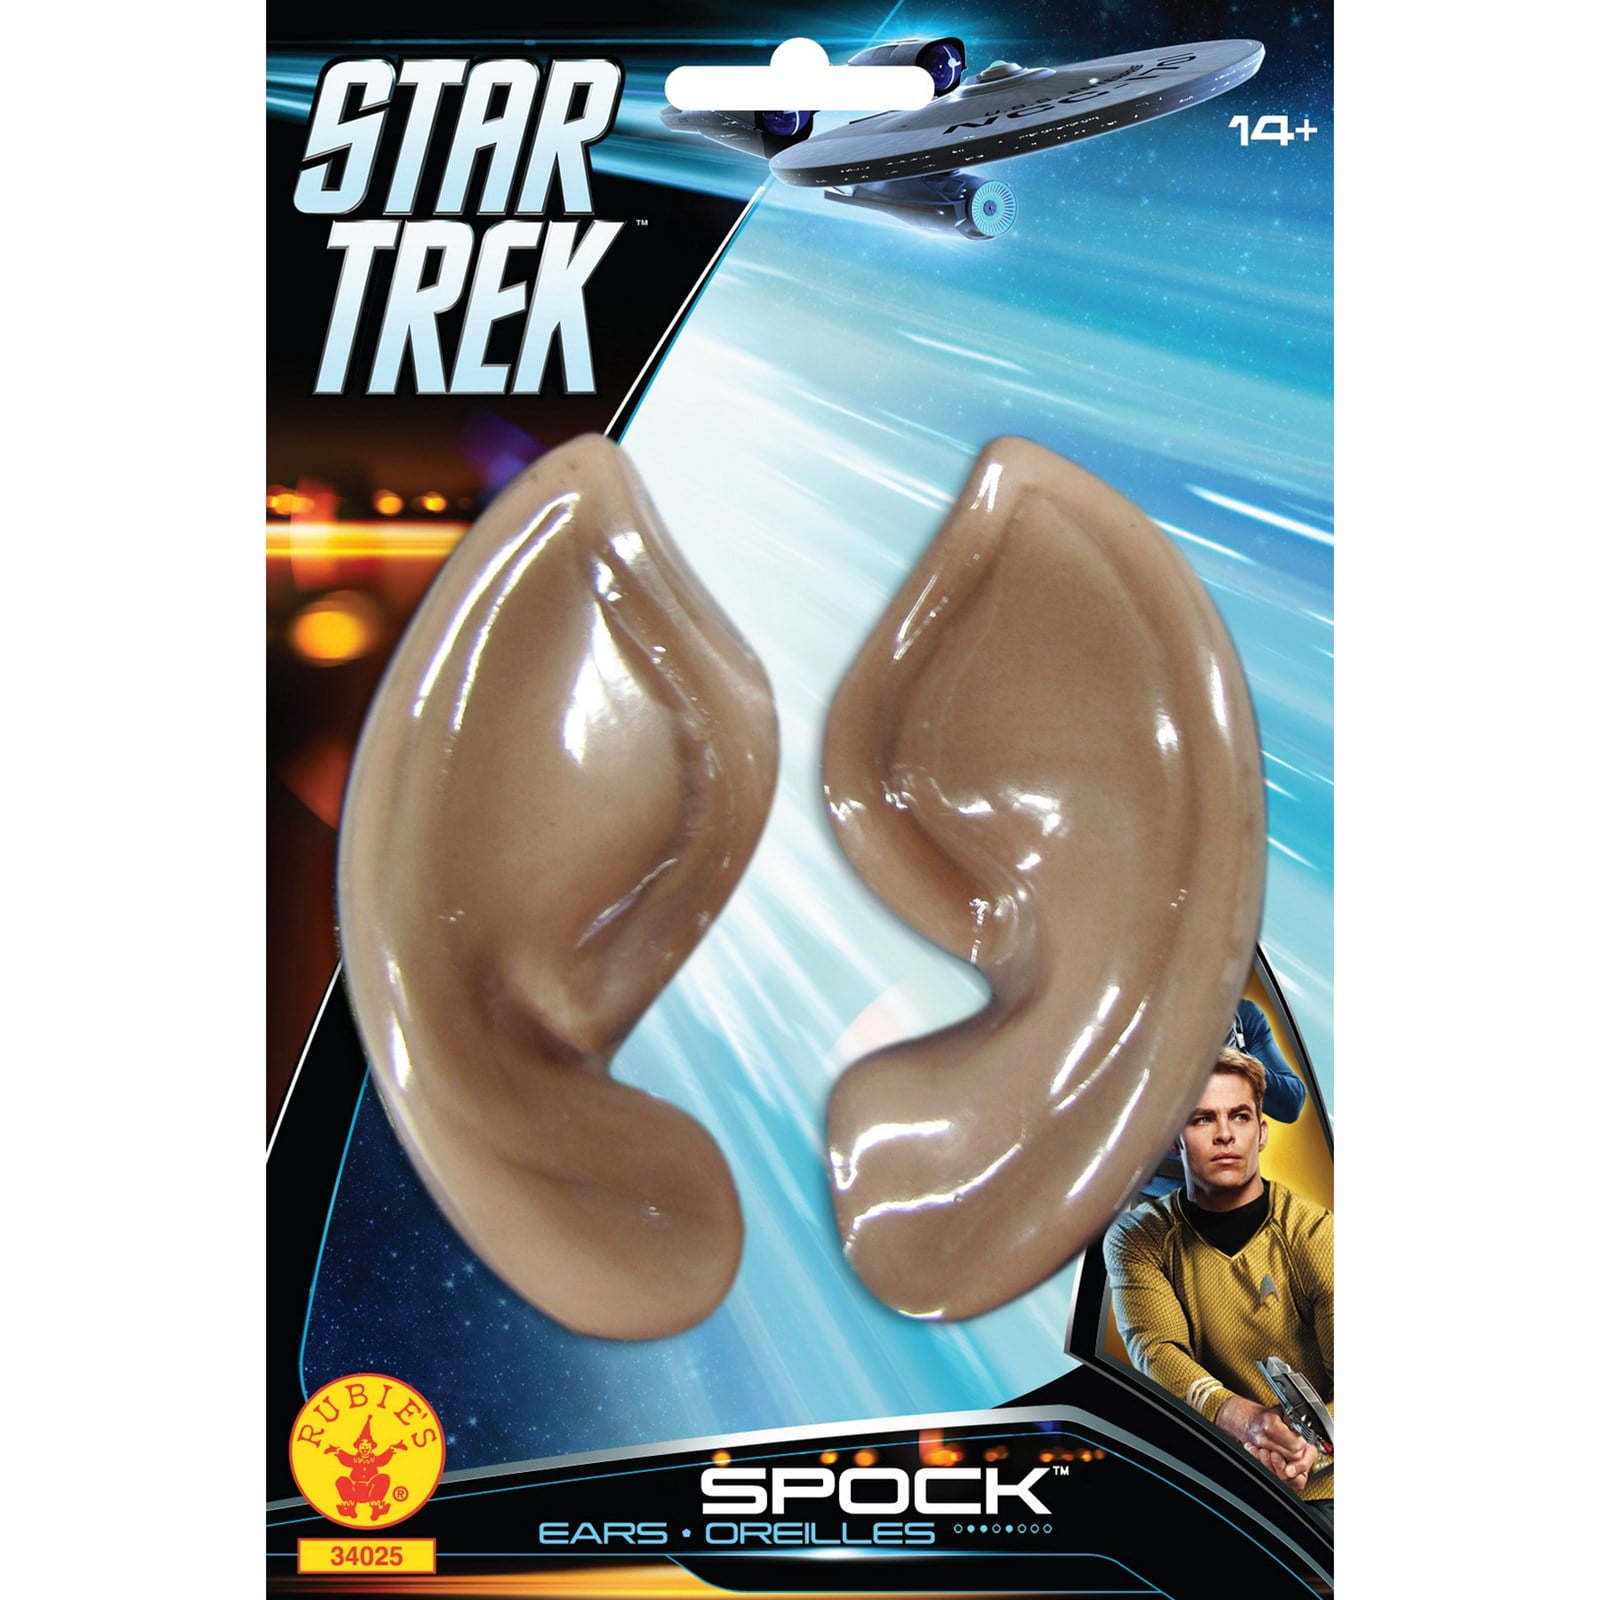 Star Trek Movie 2009 Spock Ears Adult Halloween Accessory for sale online 